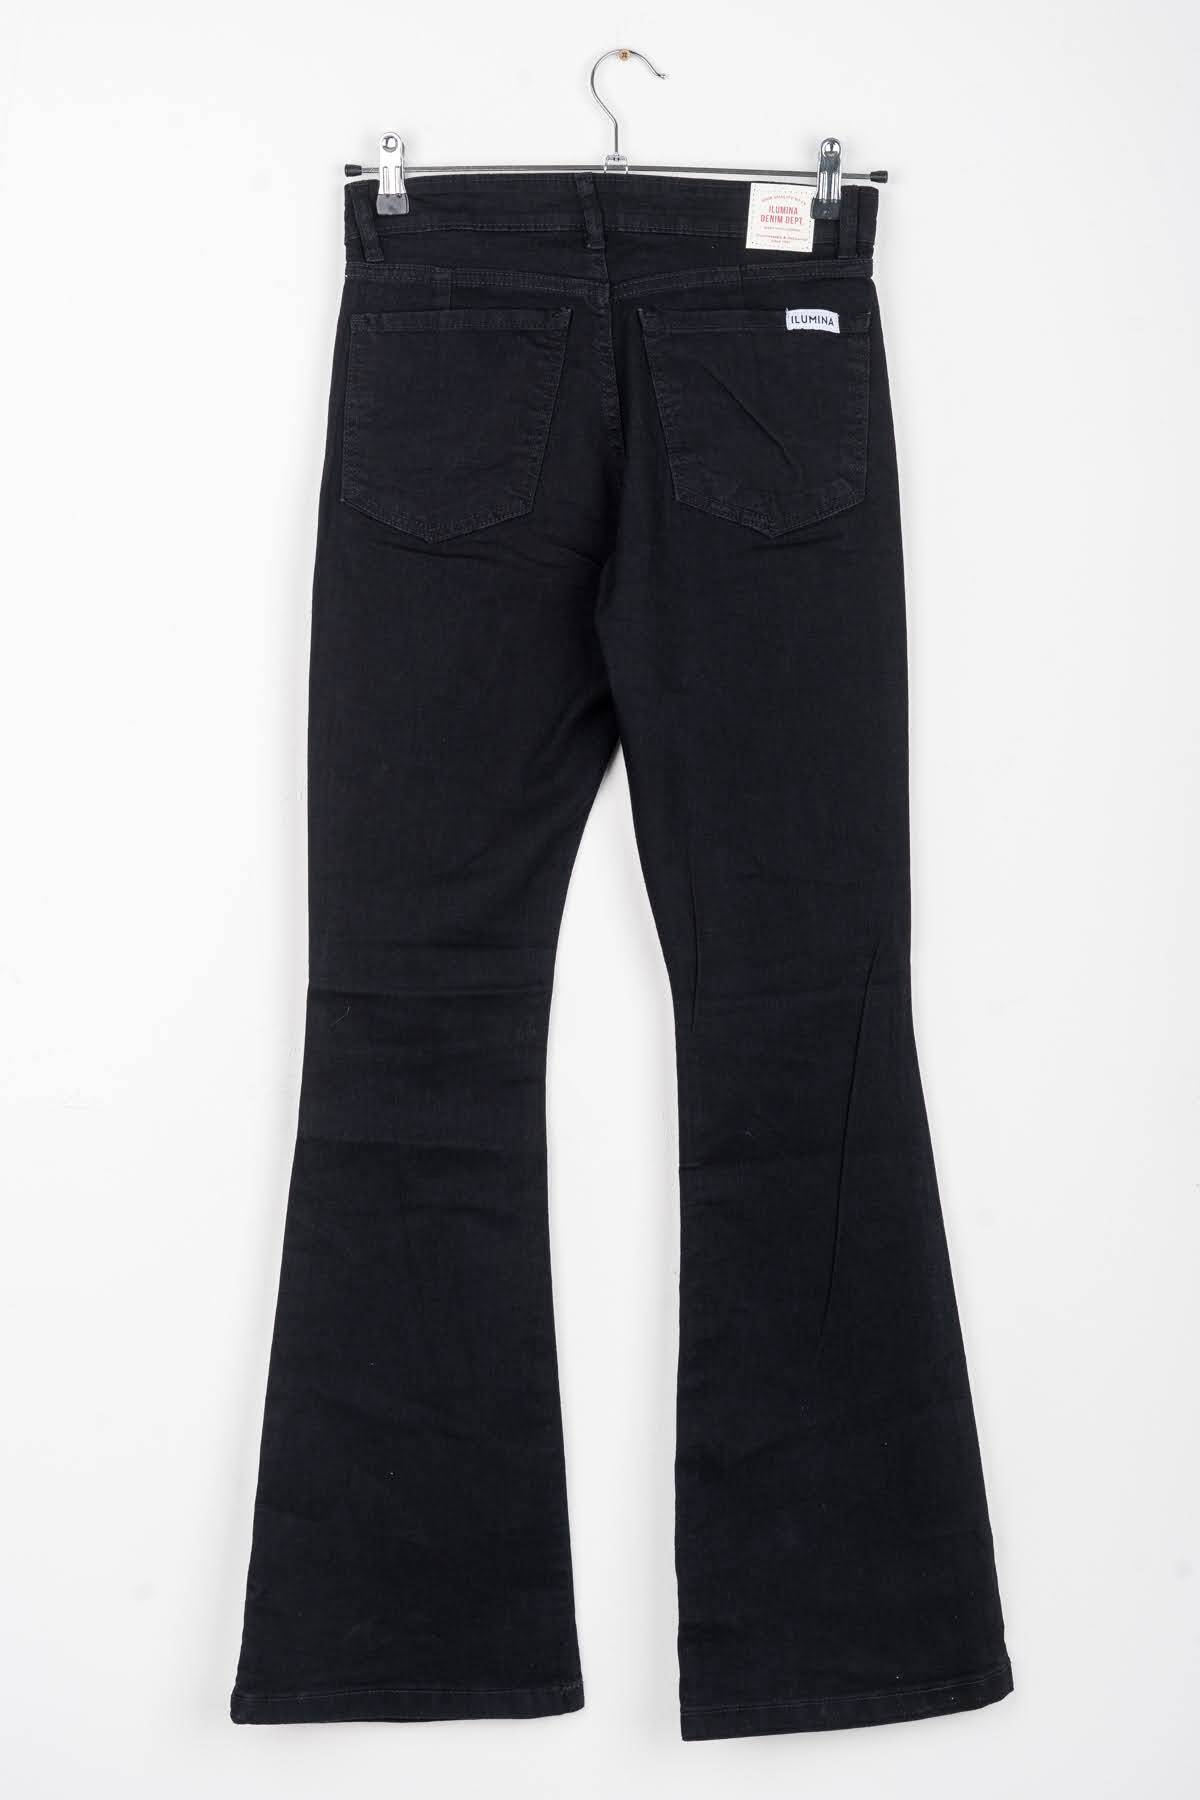 Imagen carrousel Pantalon Jeans oxford negro 4